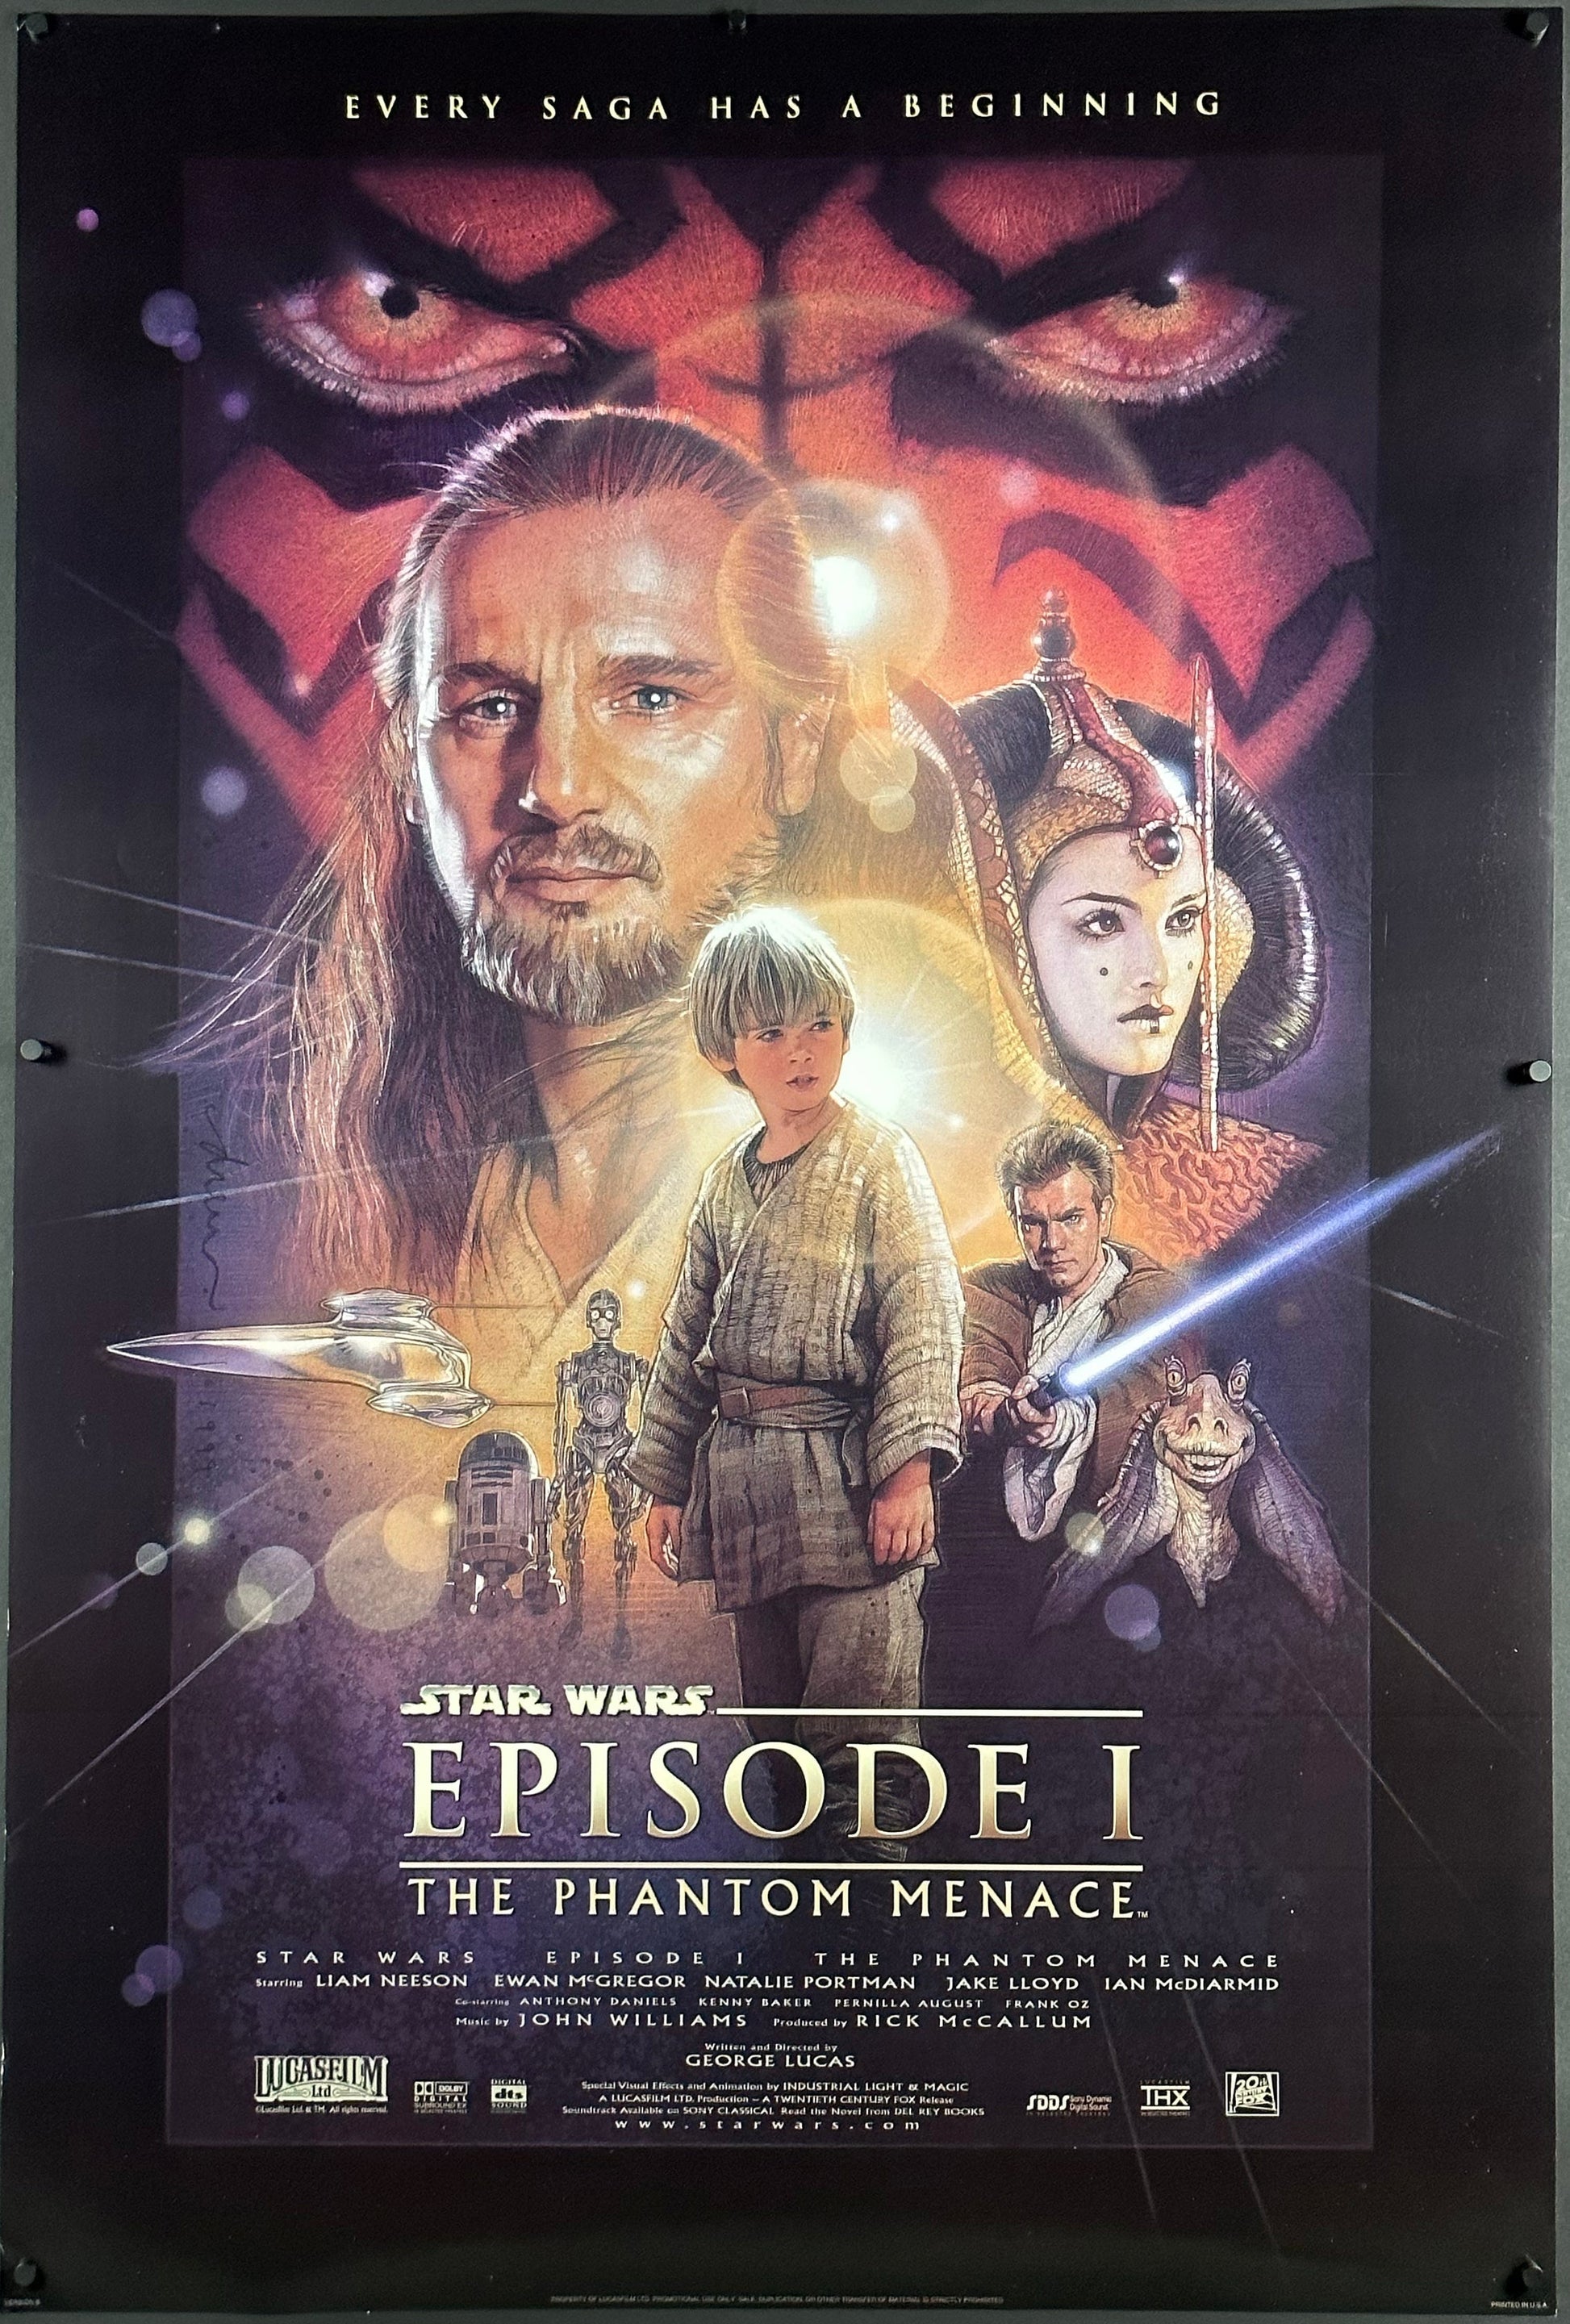 Star Wars: Episode I - The Phantom Menace US One Sheet Cast Style (1999) - ORIGINAL RELEASE - posterpalace.com